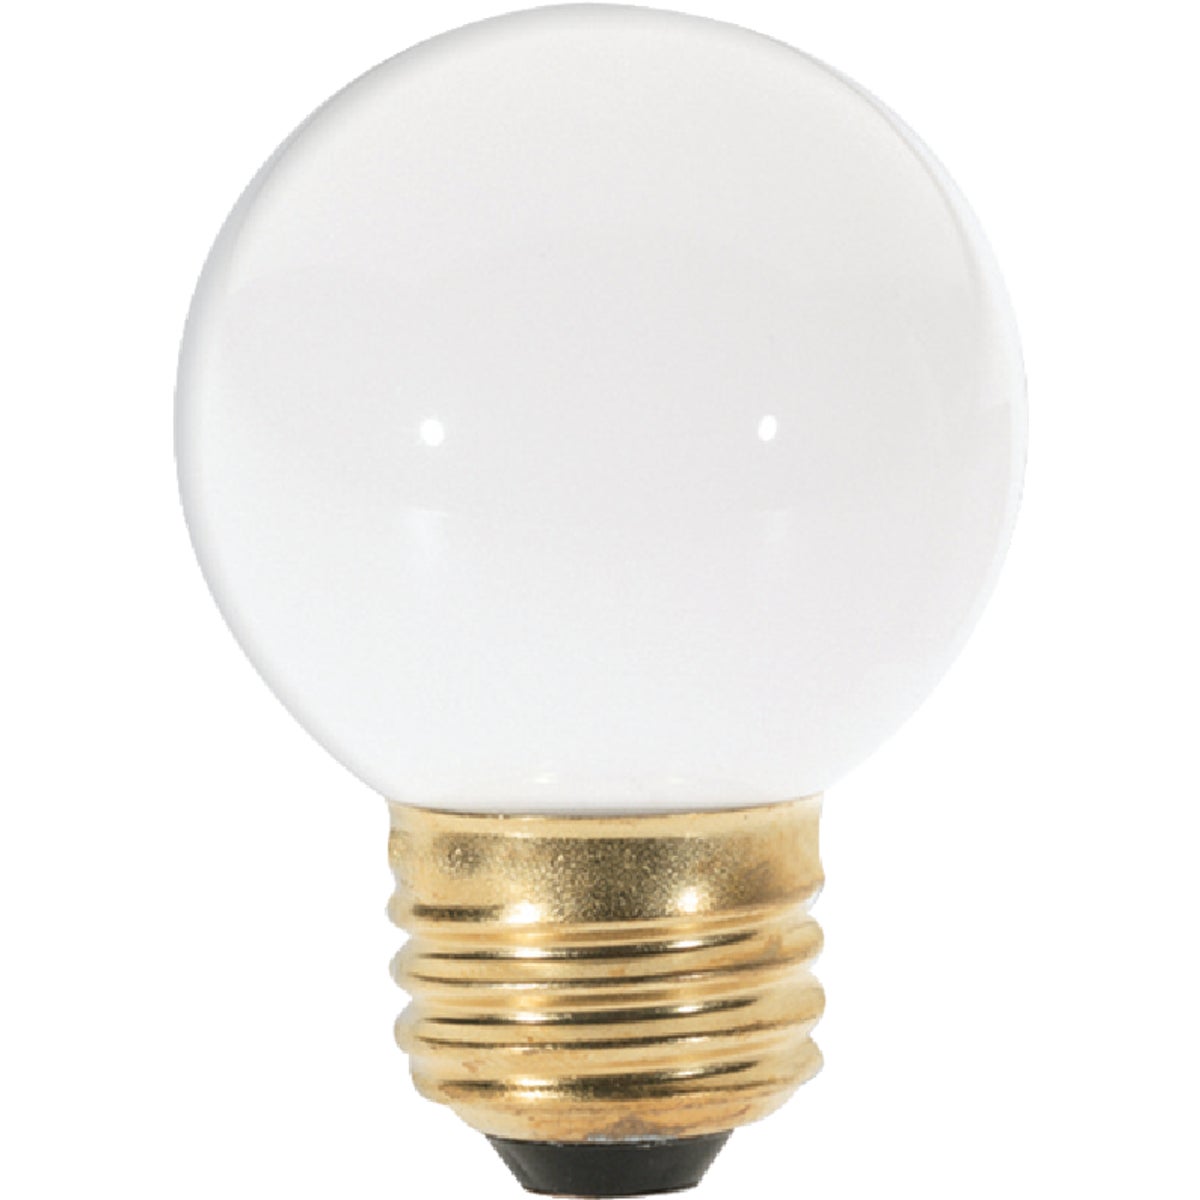 Satco 25W Frosted Medium G16.5 Incandescent Globe Light Bulb